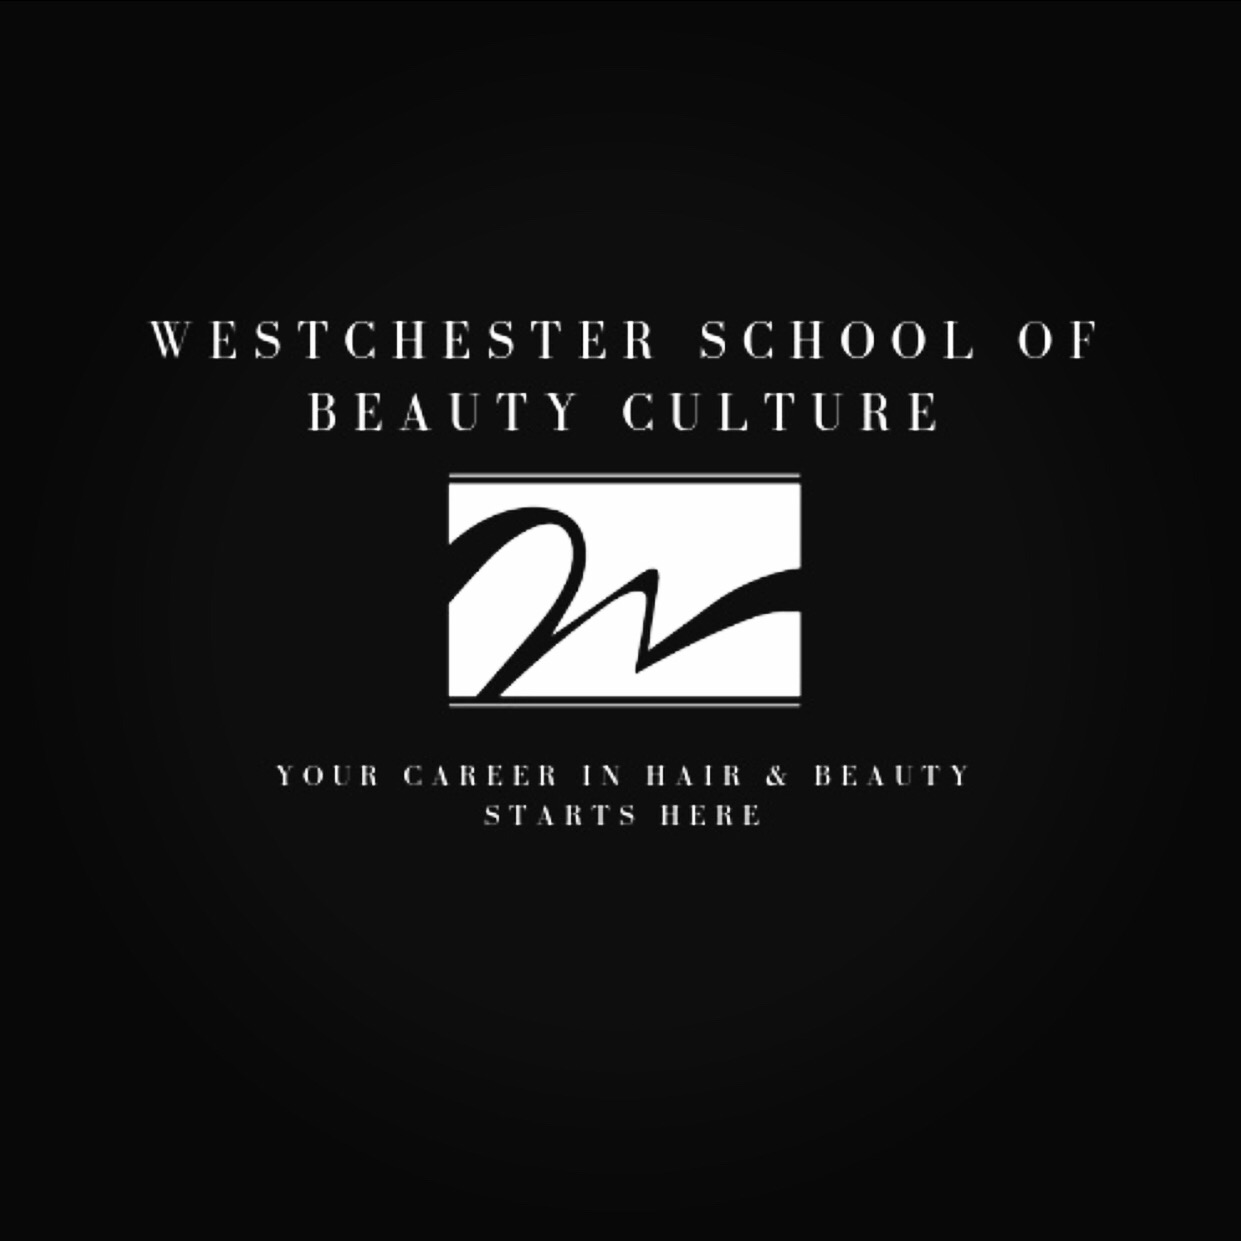 Hair & Beauty Schools | Westchester NY | Call (914) 699-2344